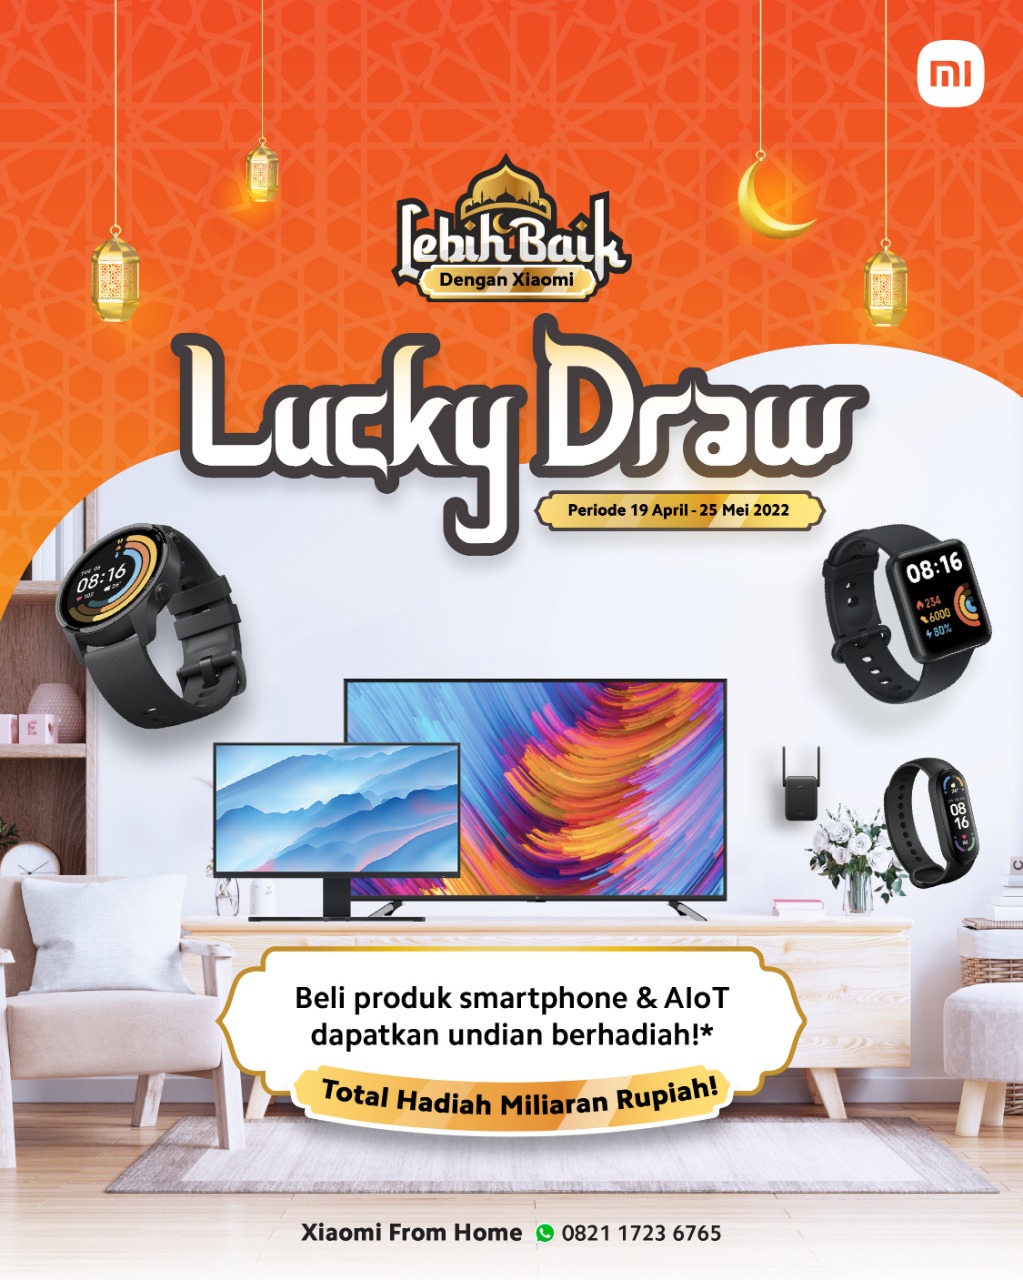 produk elektronik dari Produk Xiaomi memberikan promo menarik dengan memberikan lucky draw untuk pembelian Smartphone dan produk elektronik